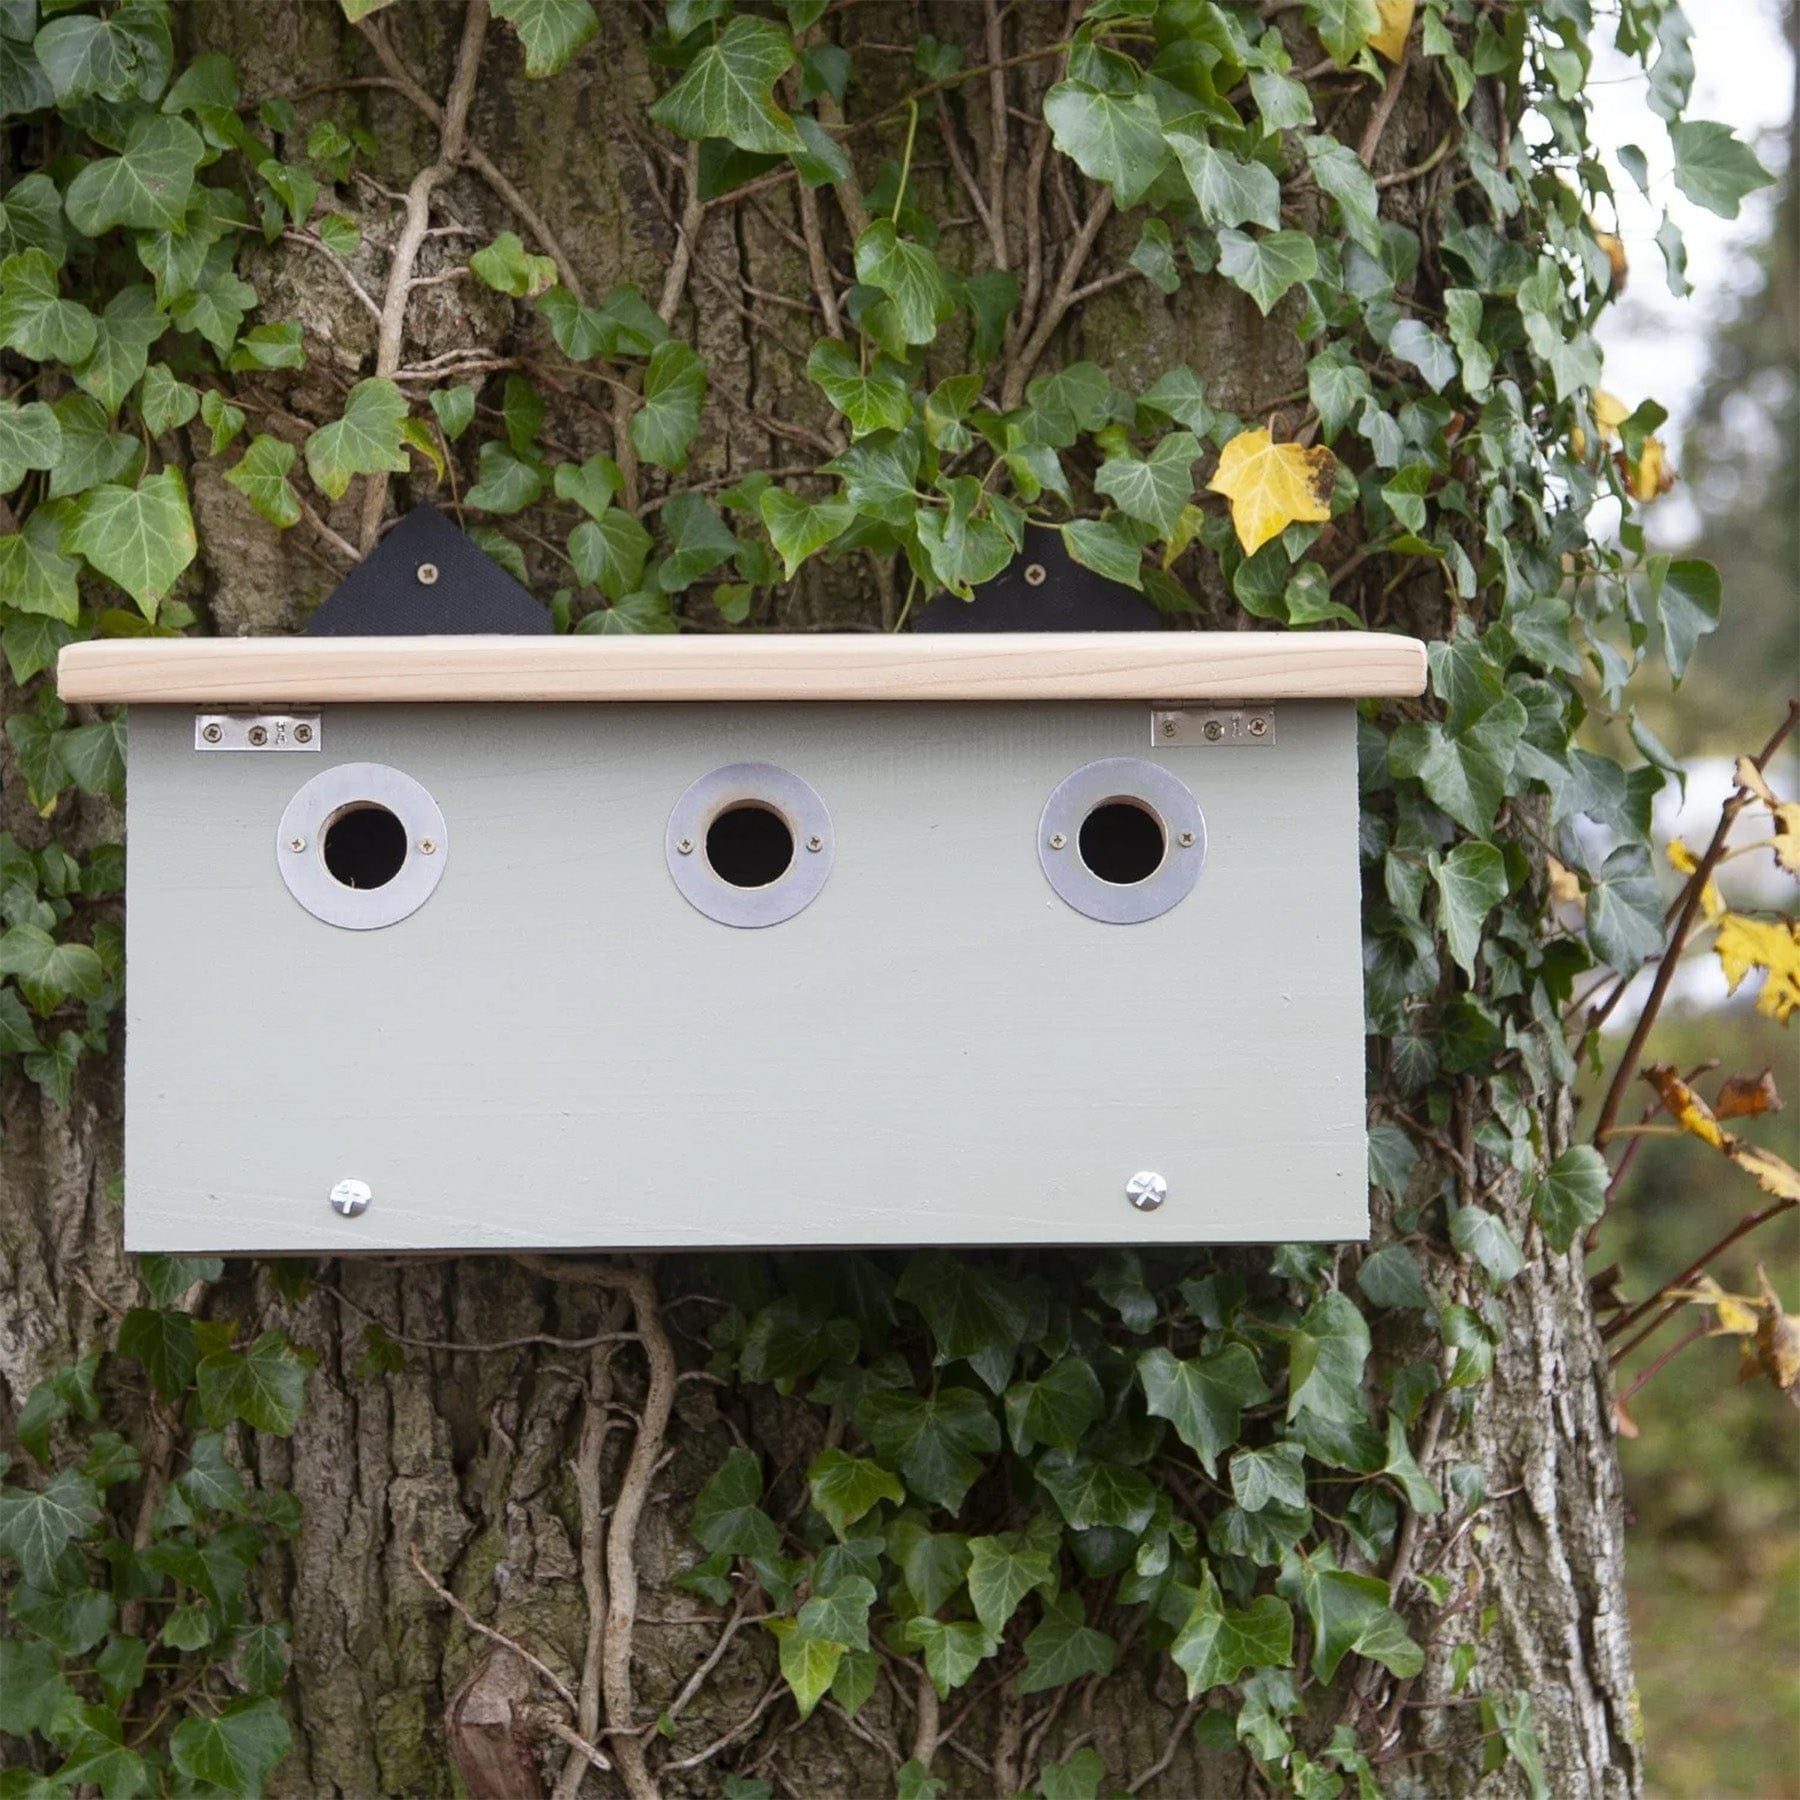 Conservation sparrow nest box